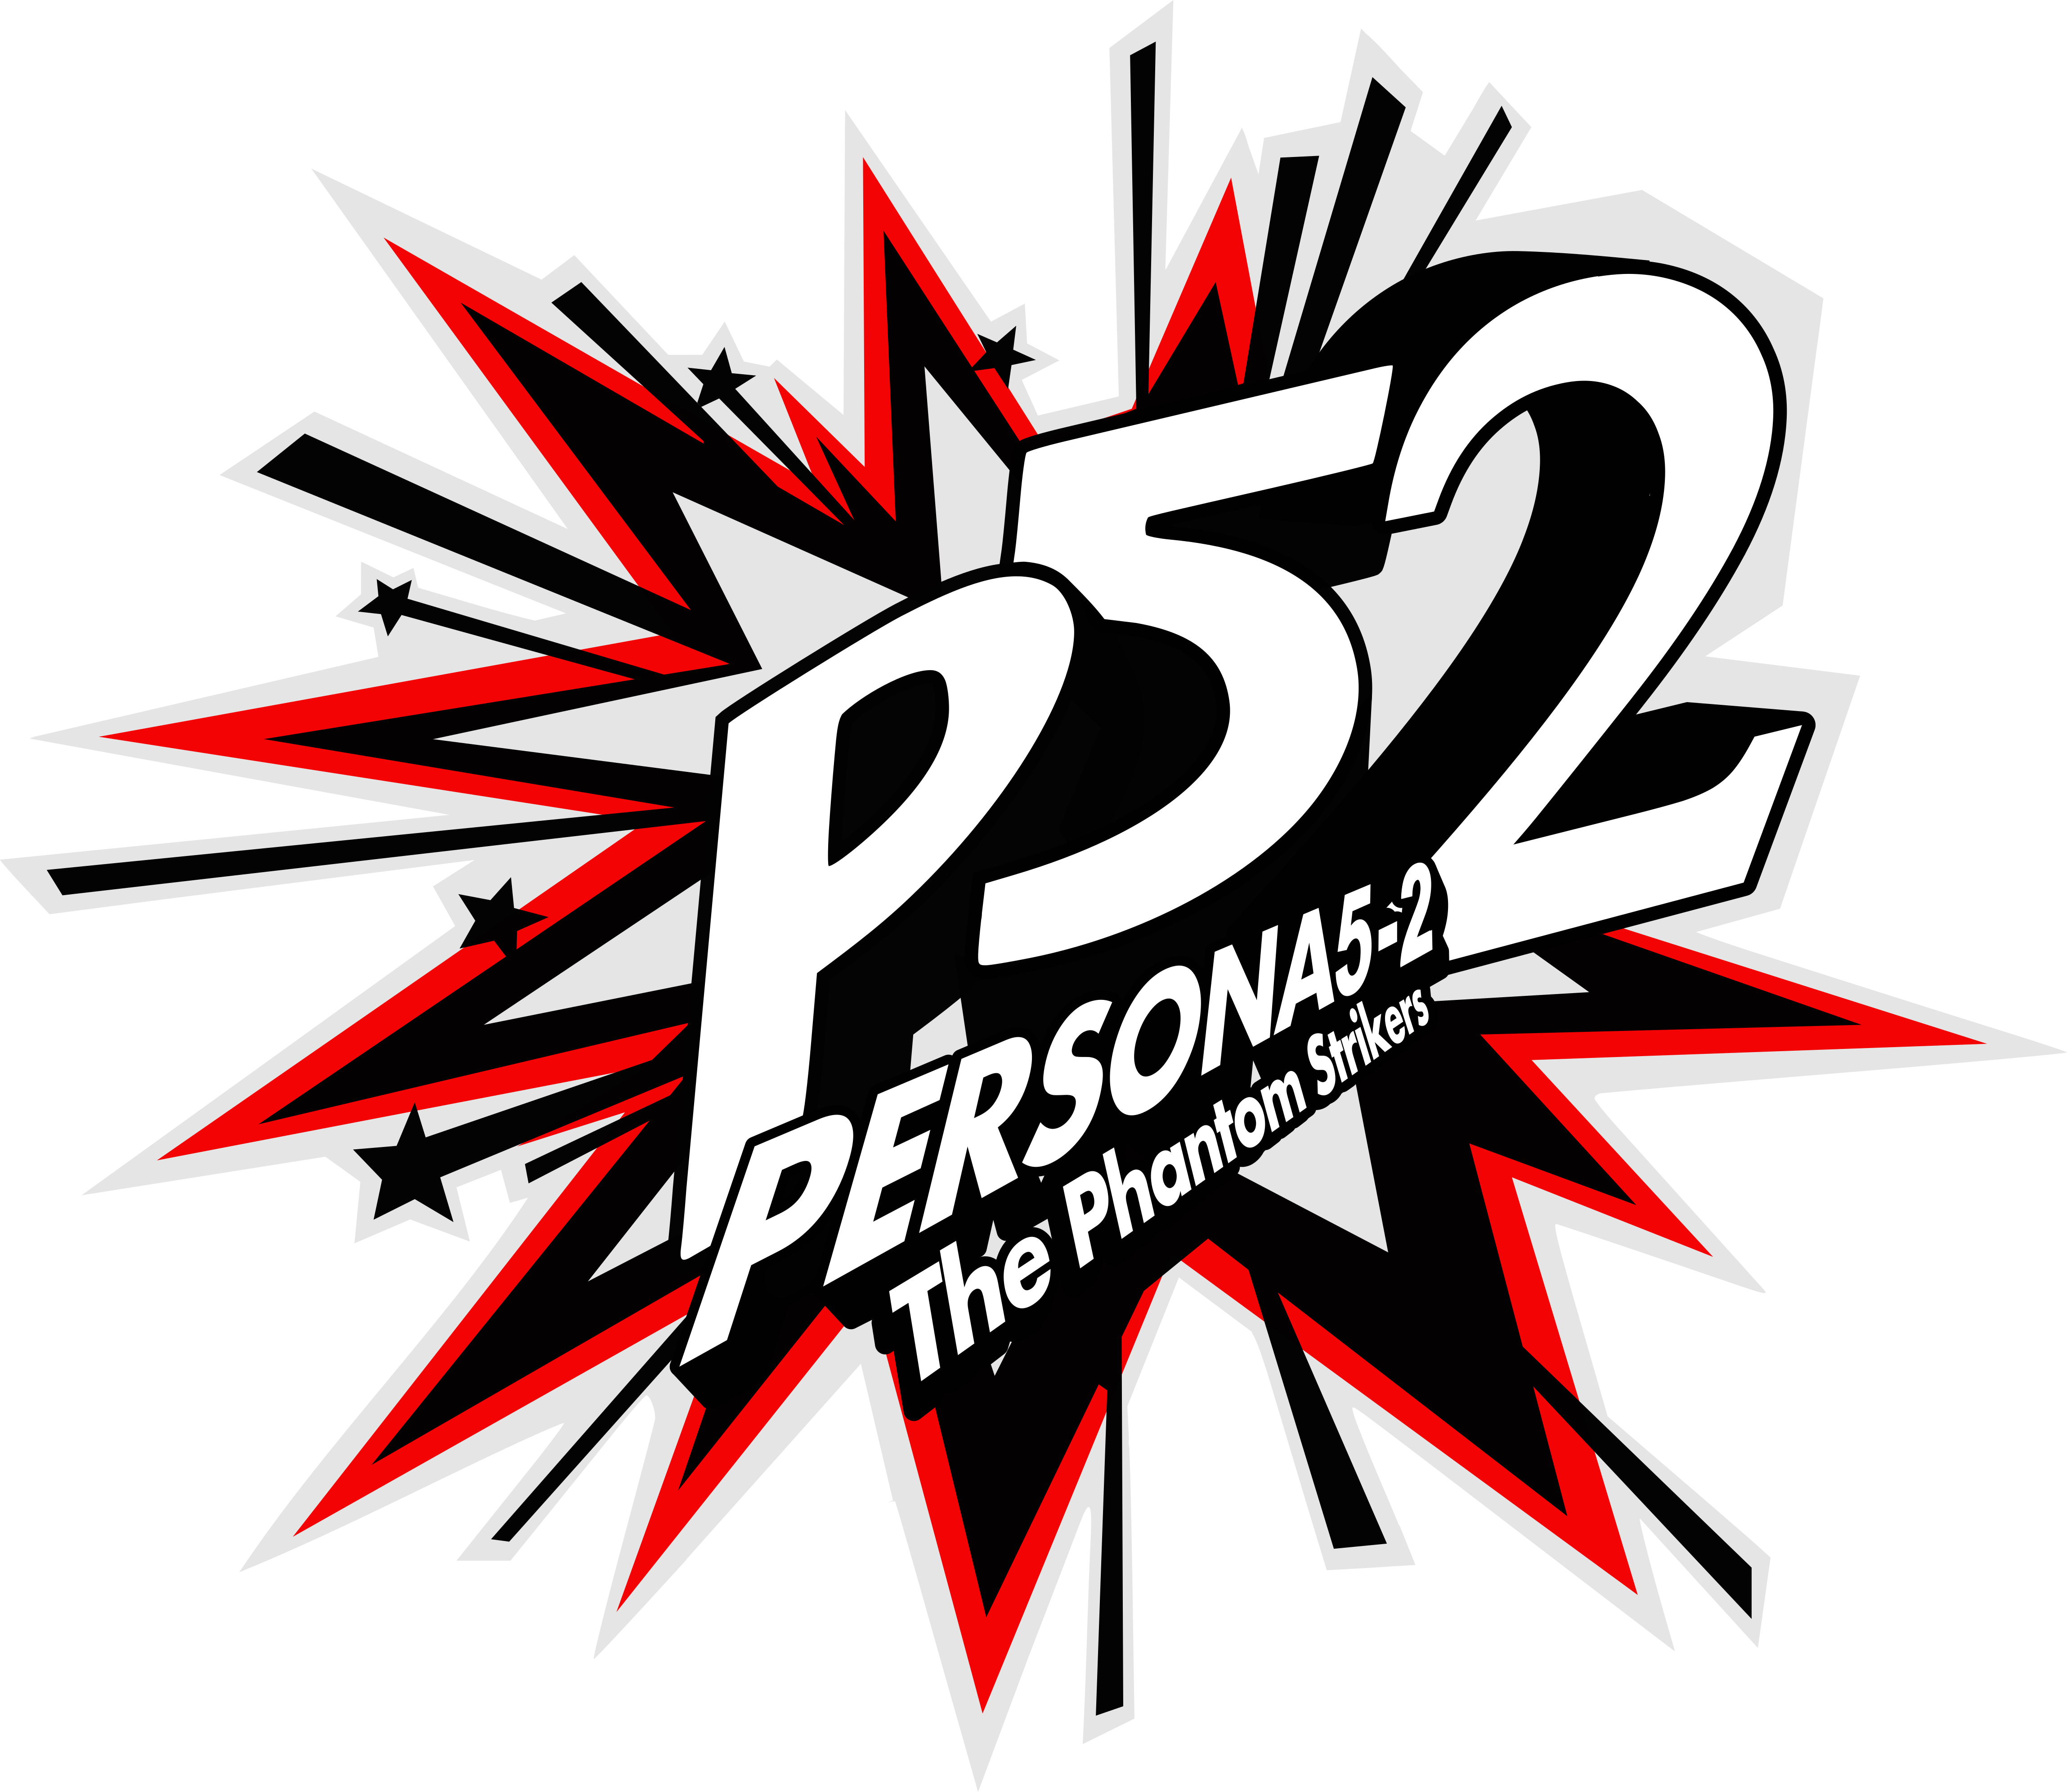 Is Persona 5 Scramble Actually Just Persona 5-2? 